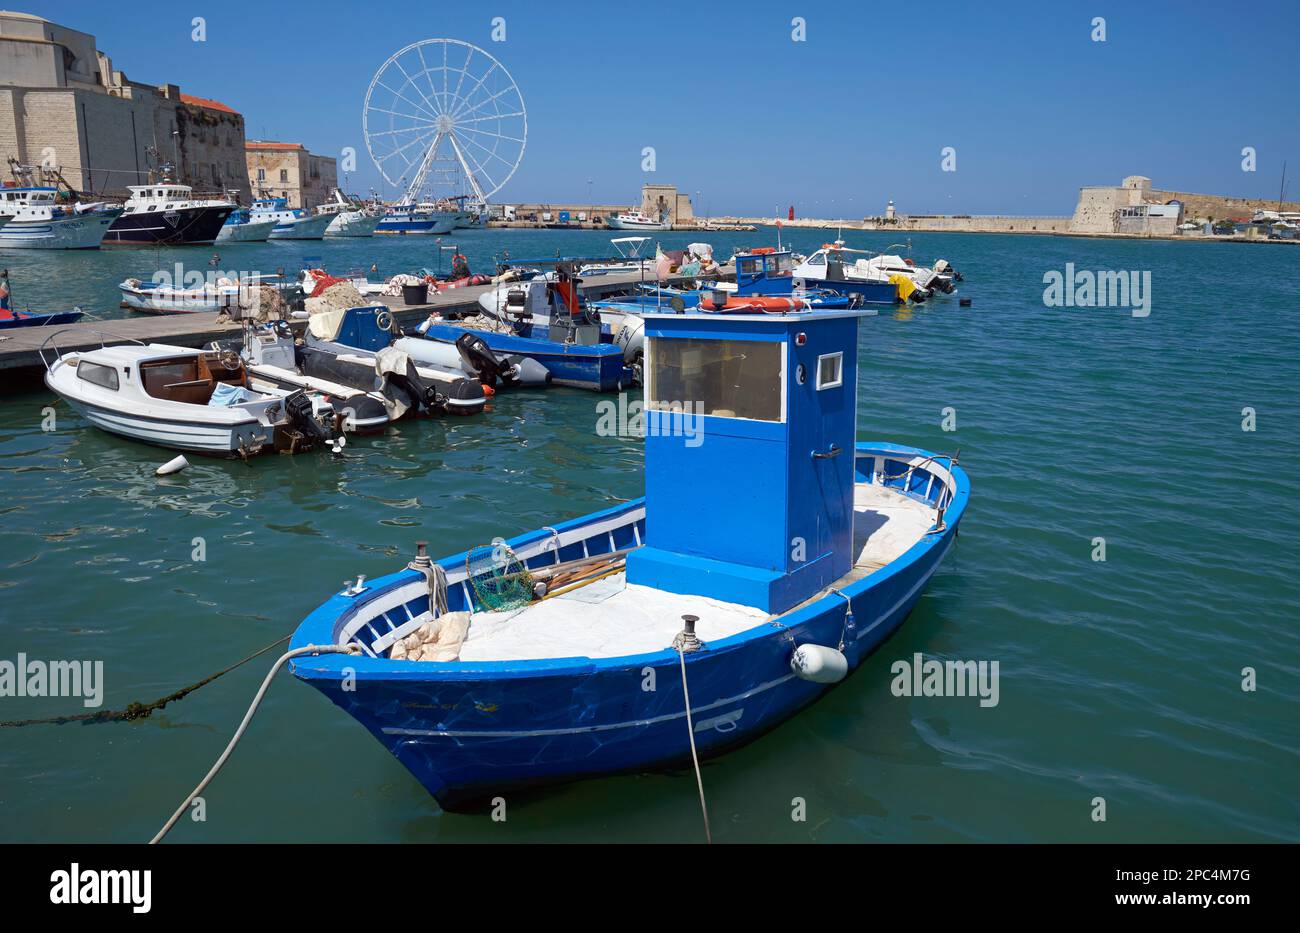 A fishing boat in the harbour at Trani, Apulia (Puglia), Italy. Stock Photo